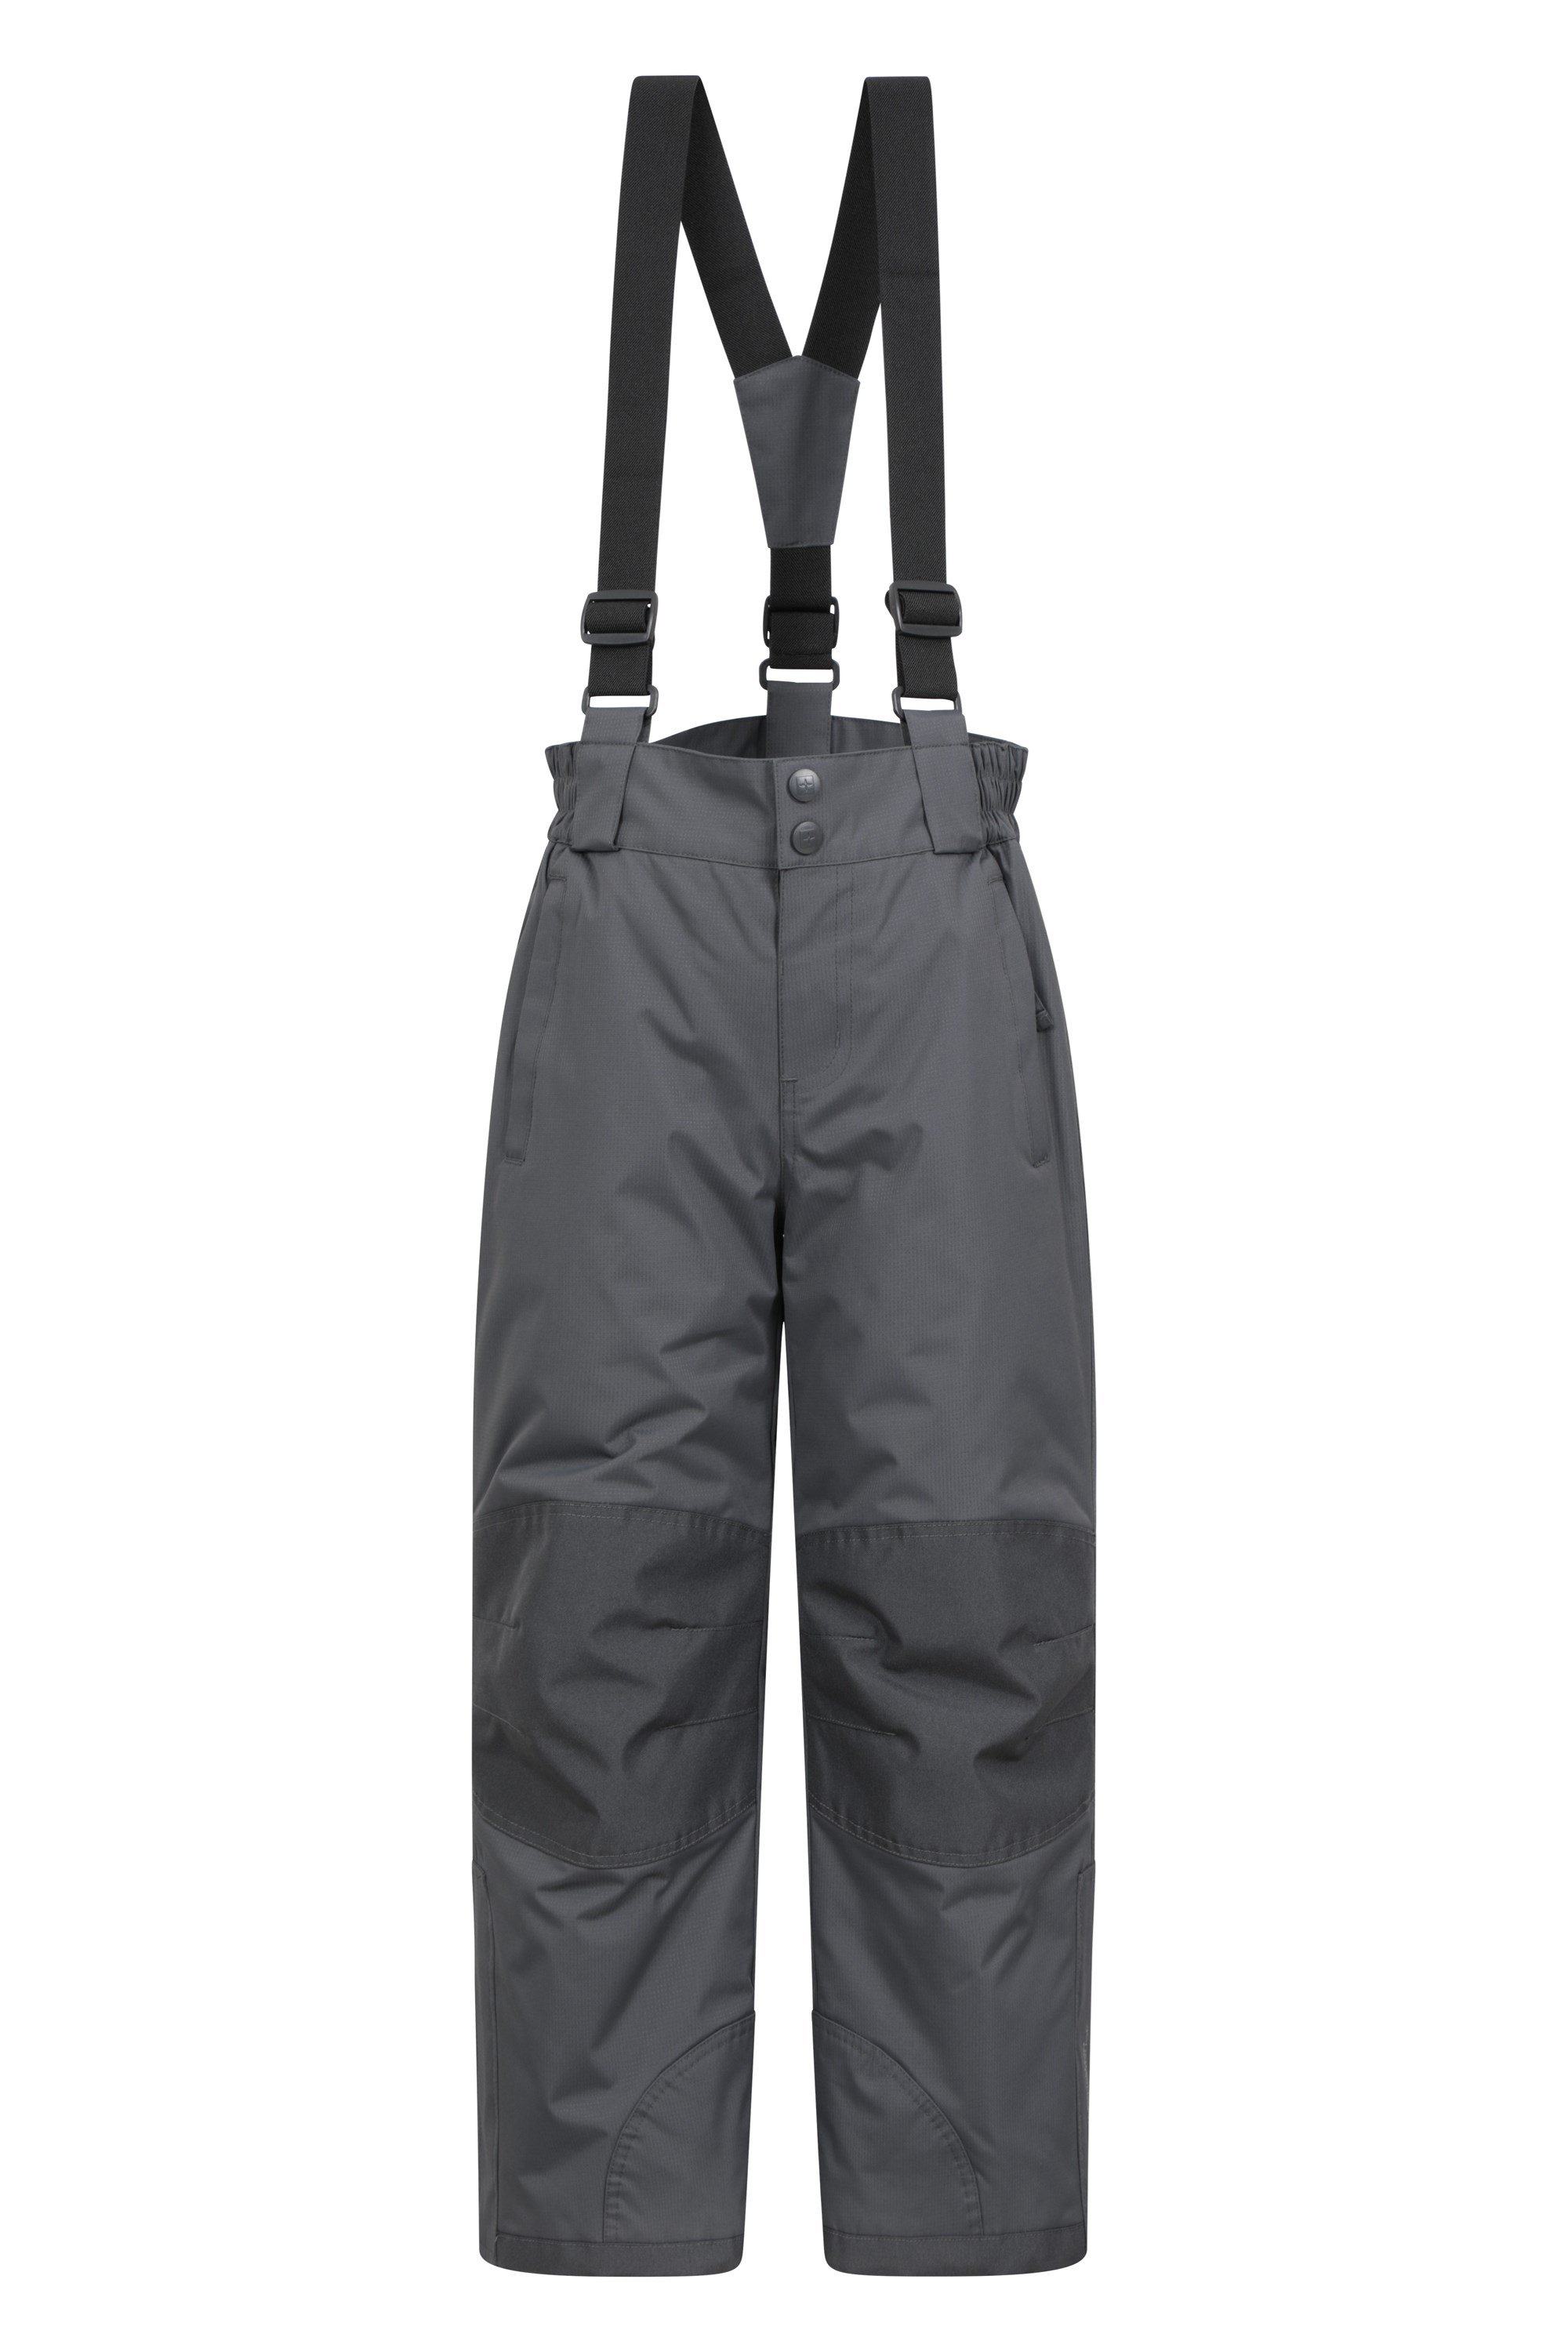 Mountain Warehouse Mountain Warehouse Boys Black  Polyester Snow Pants Trousers Size 9 Months L24 i 